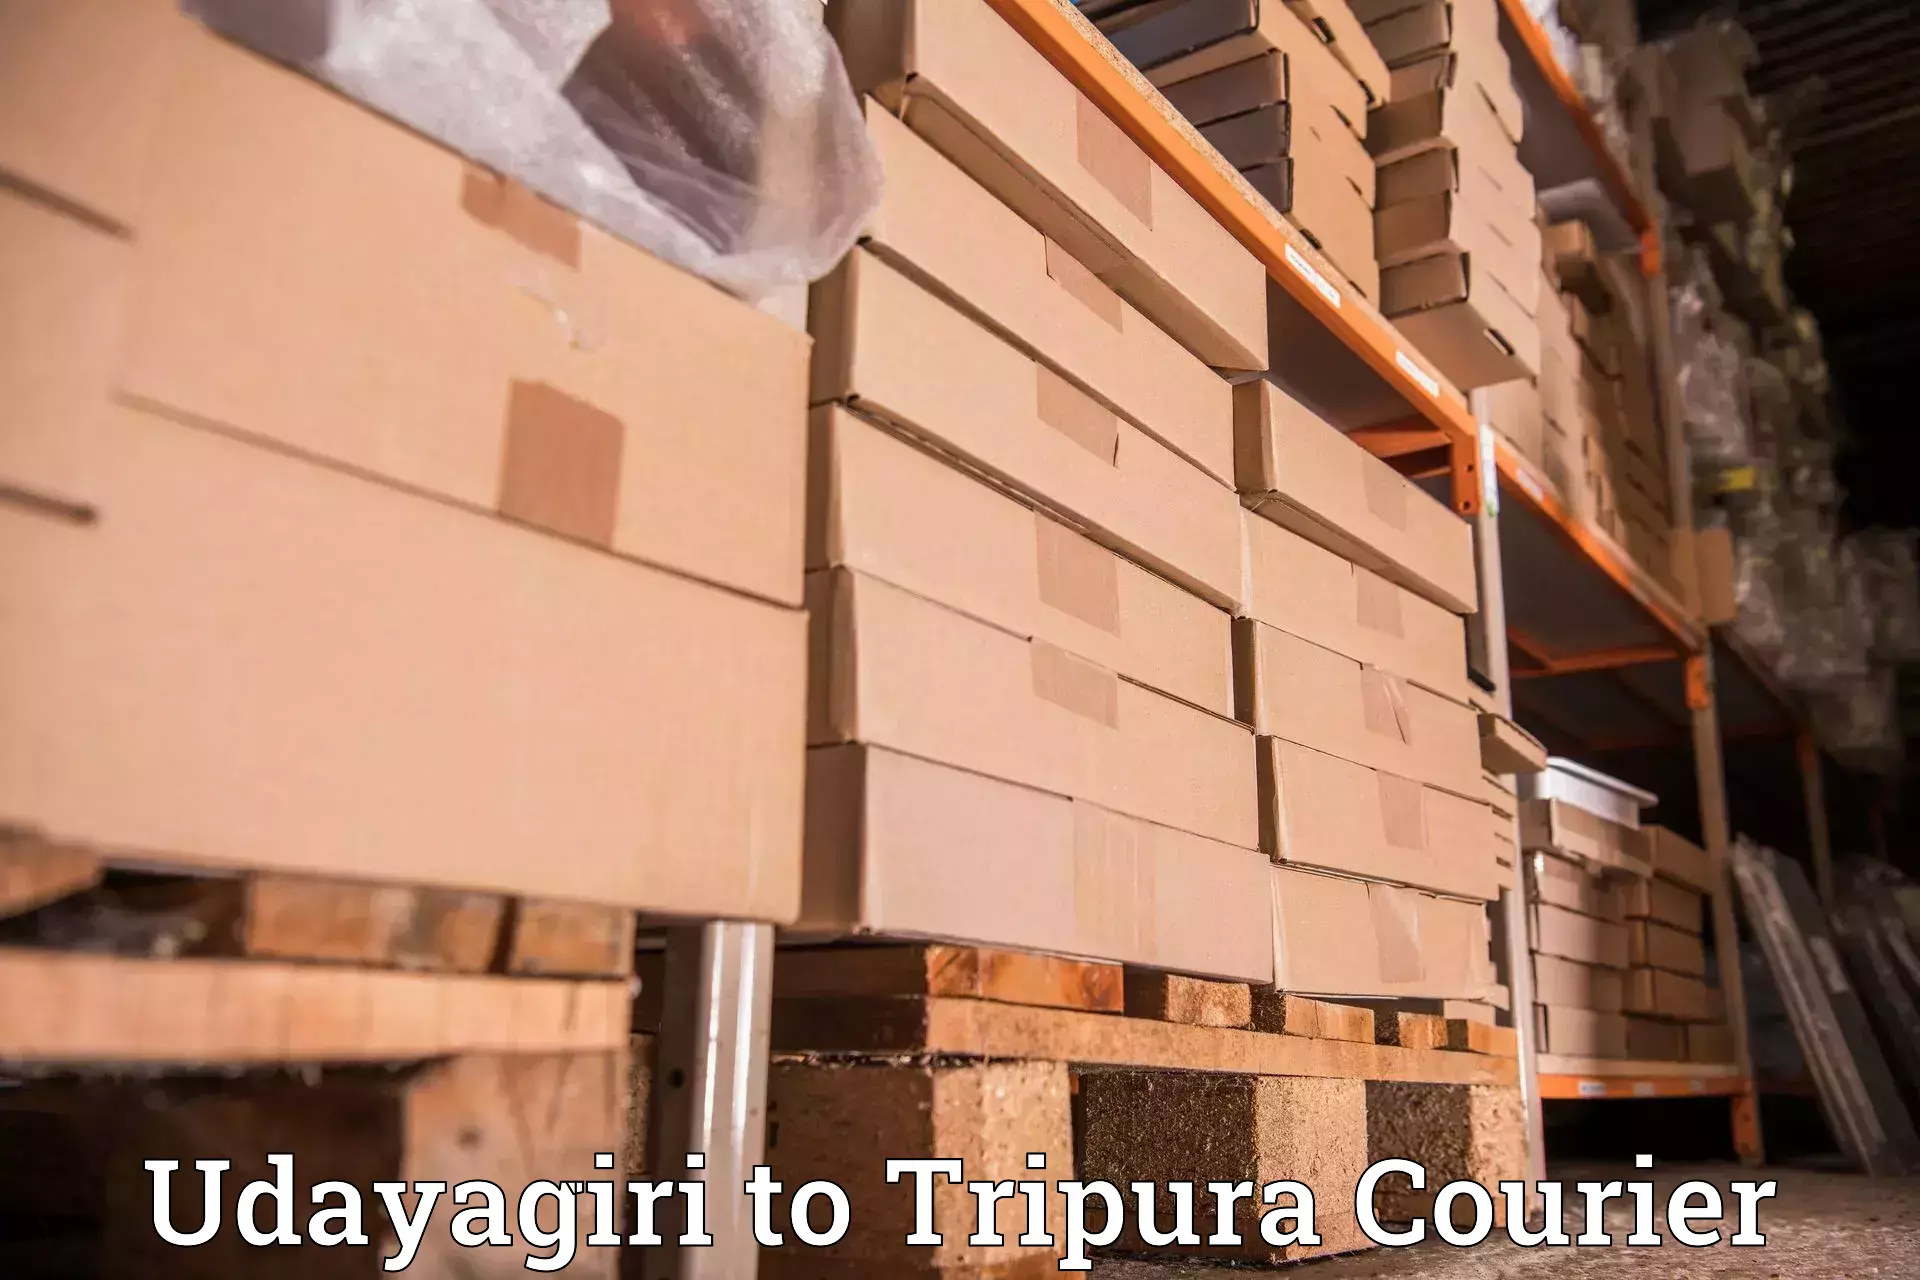 Efficient order fulfillment in Udayagiri to Udaipur Tripura